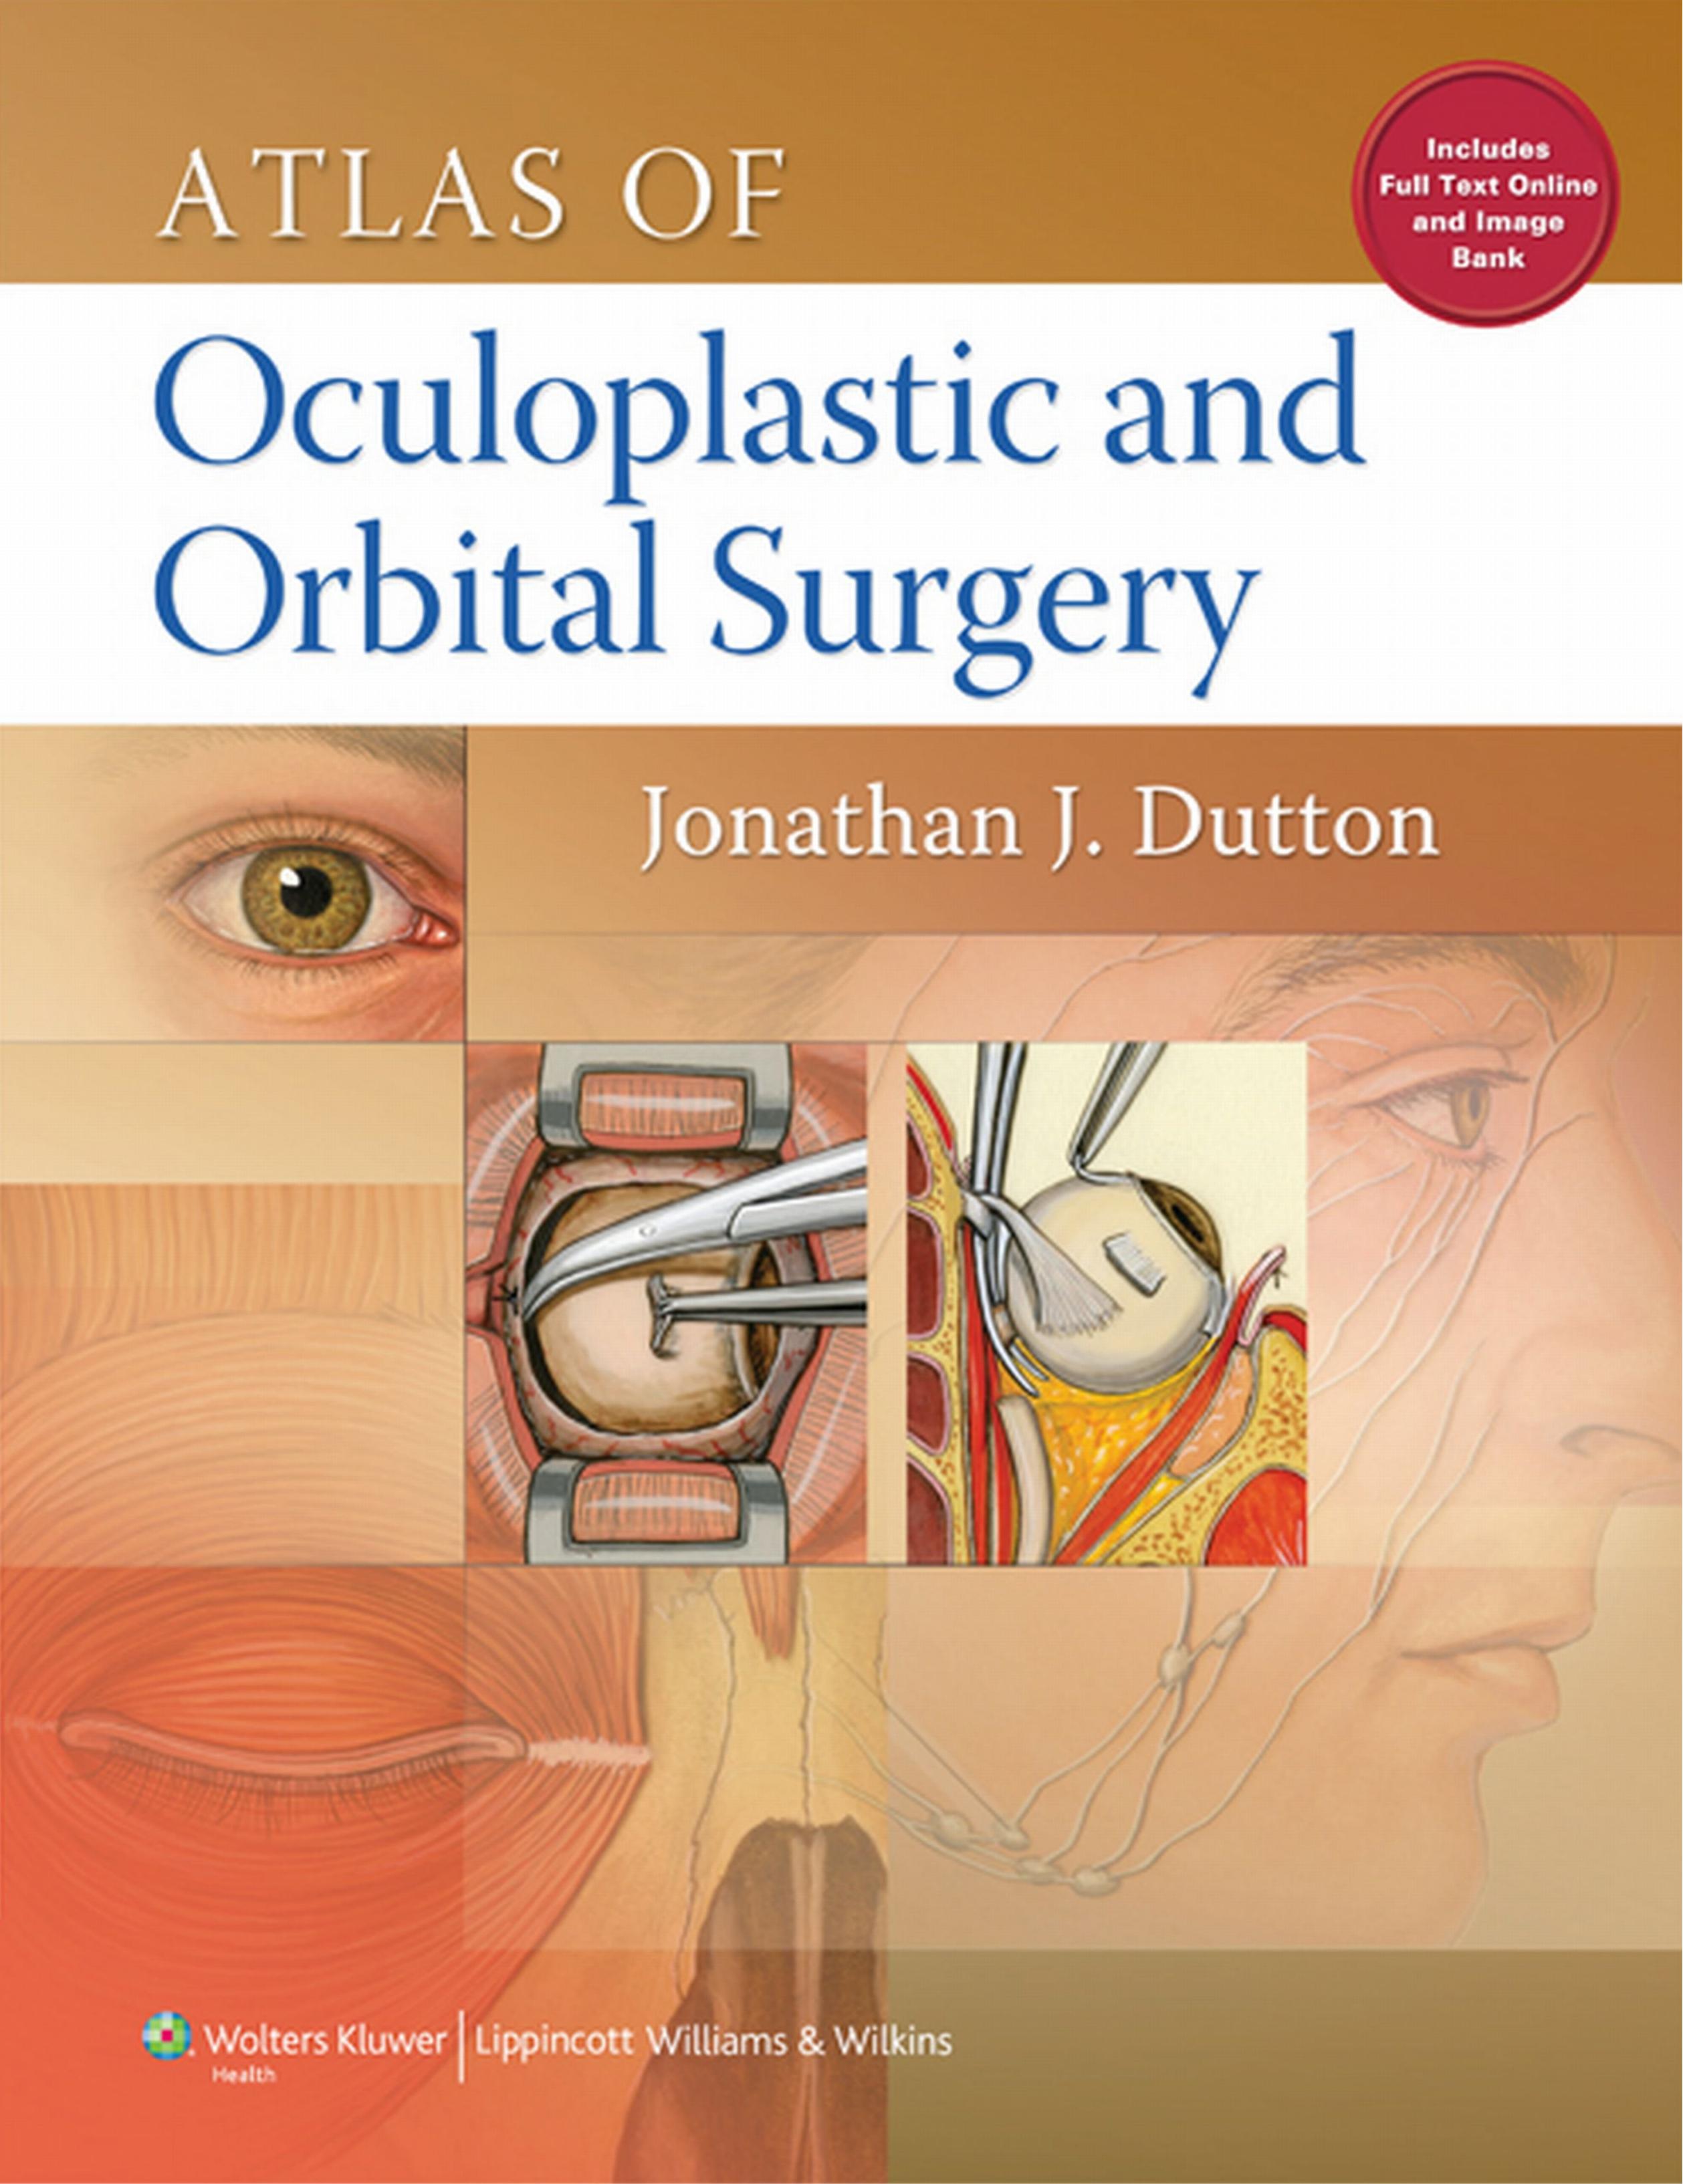 Atlas of Oculoplastic and Orbital Surgery by Jonathan Dutton